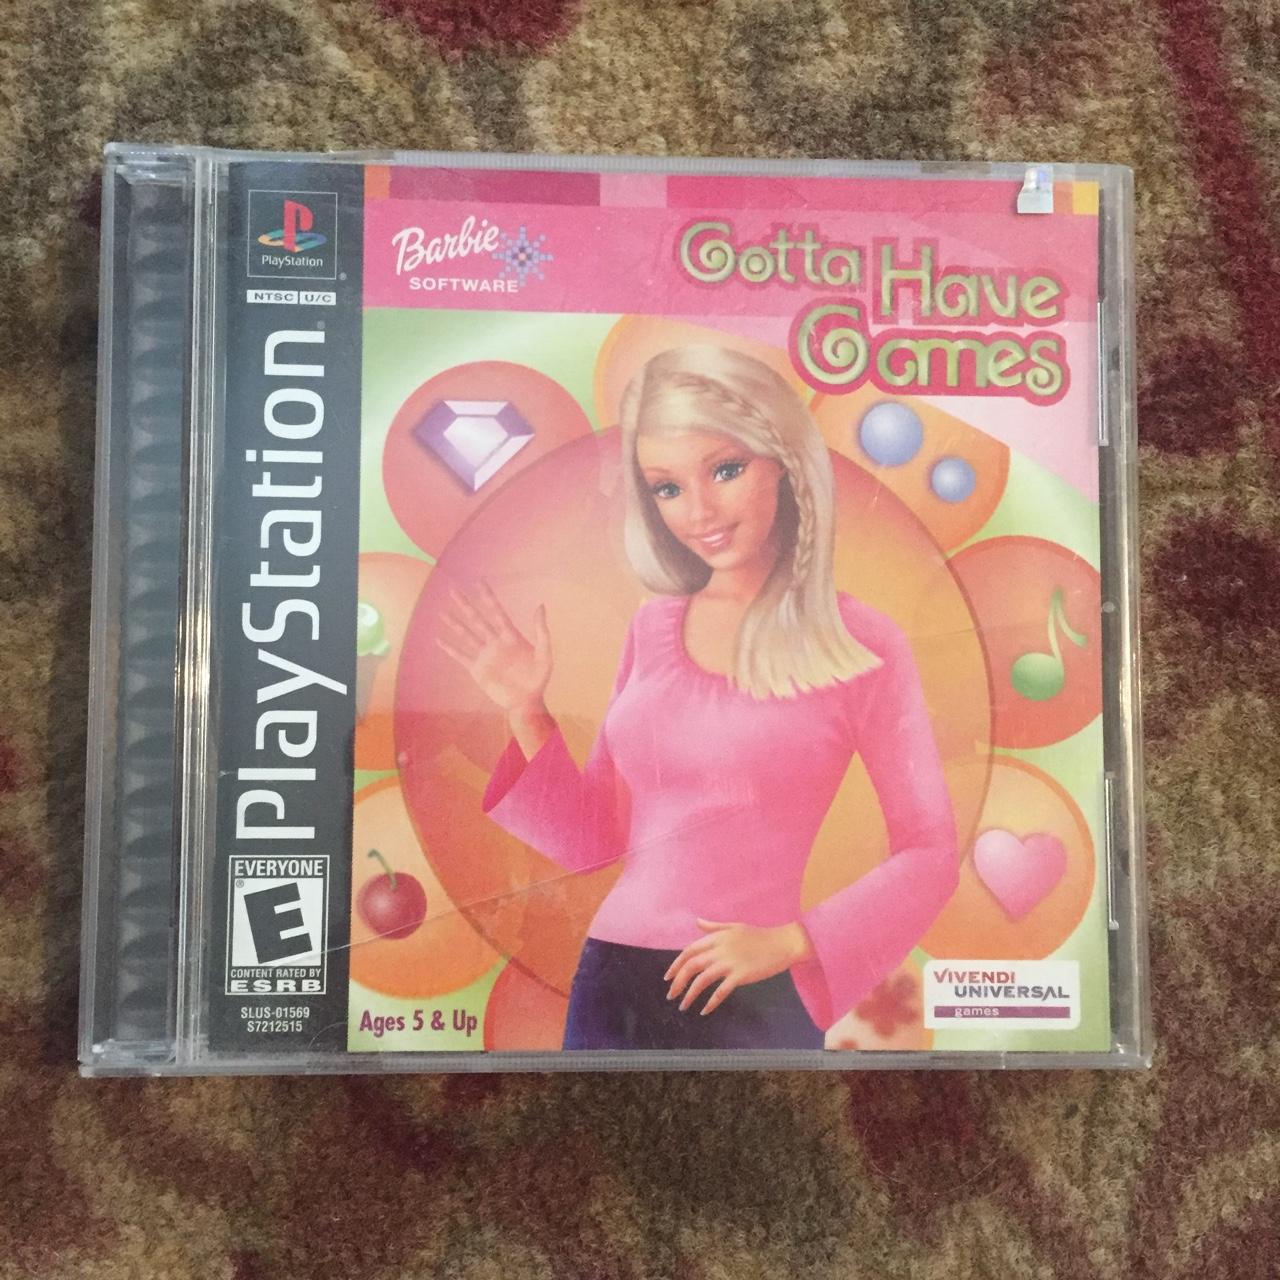 Barbie: Gotta Have Games (USA) PSX ISO - CDRomance